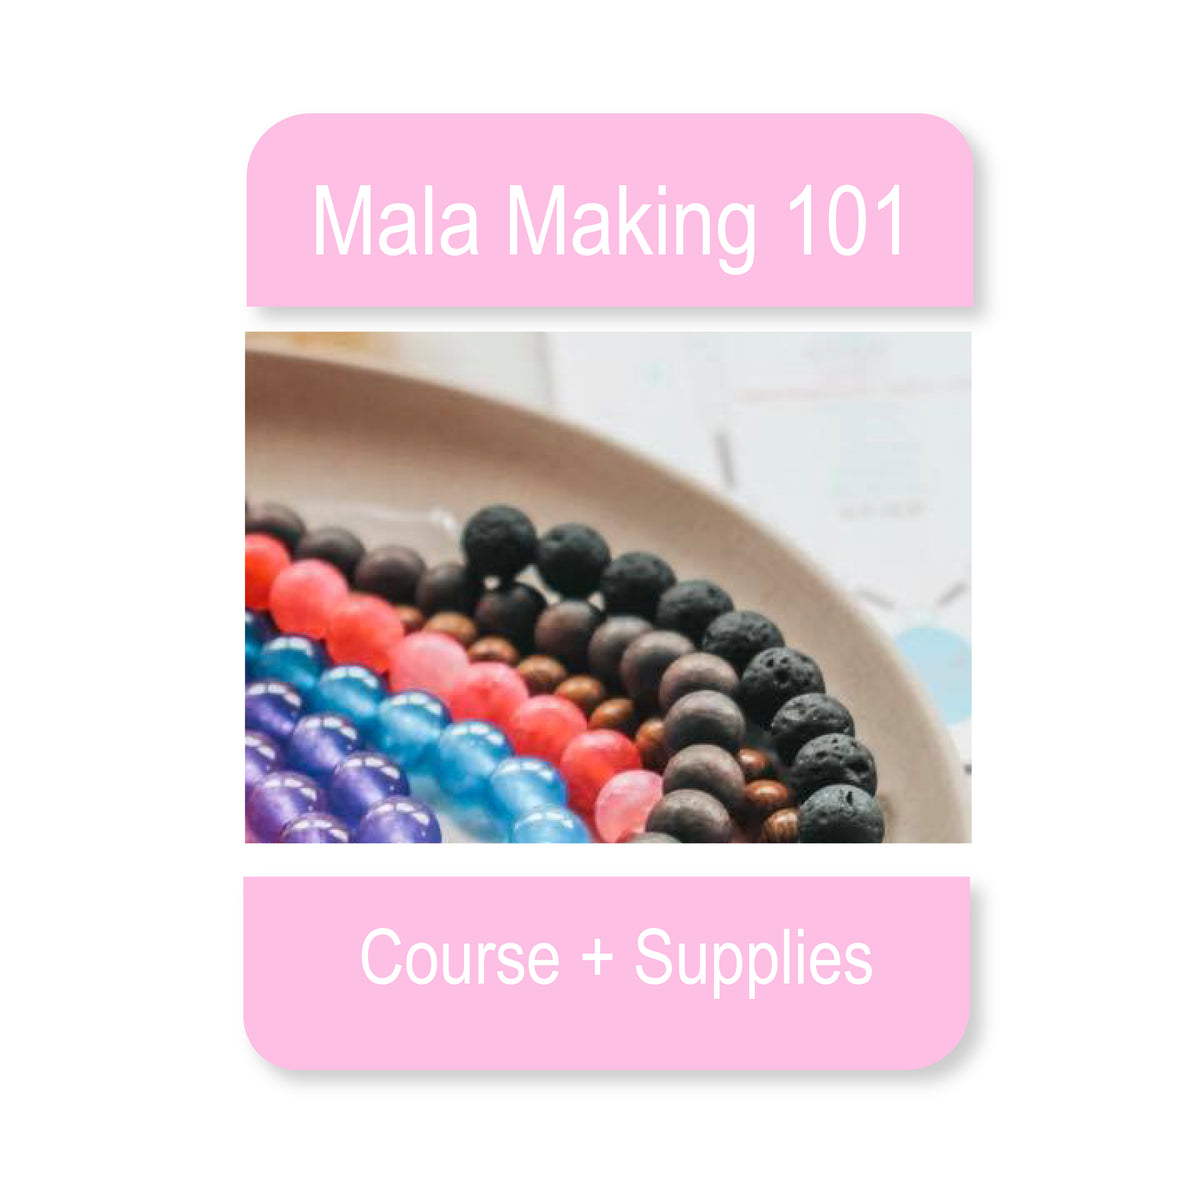 Mala Making 101 | eCourse or In - Person